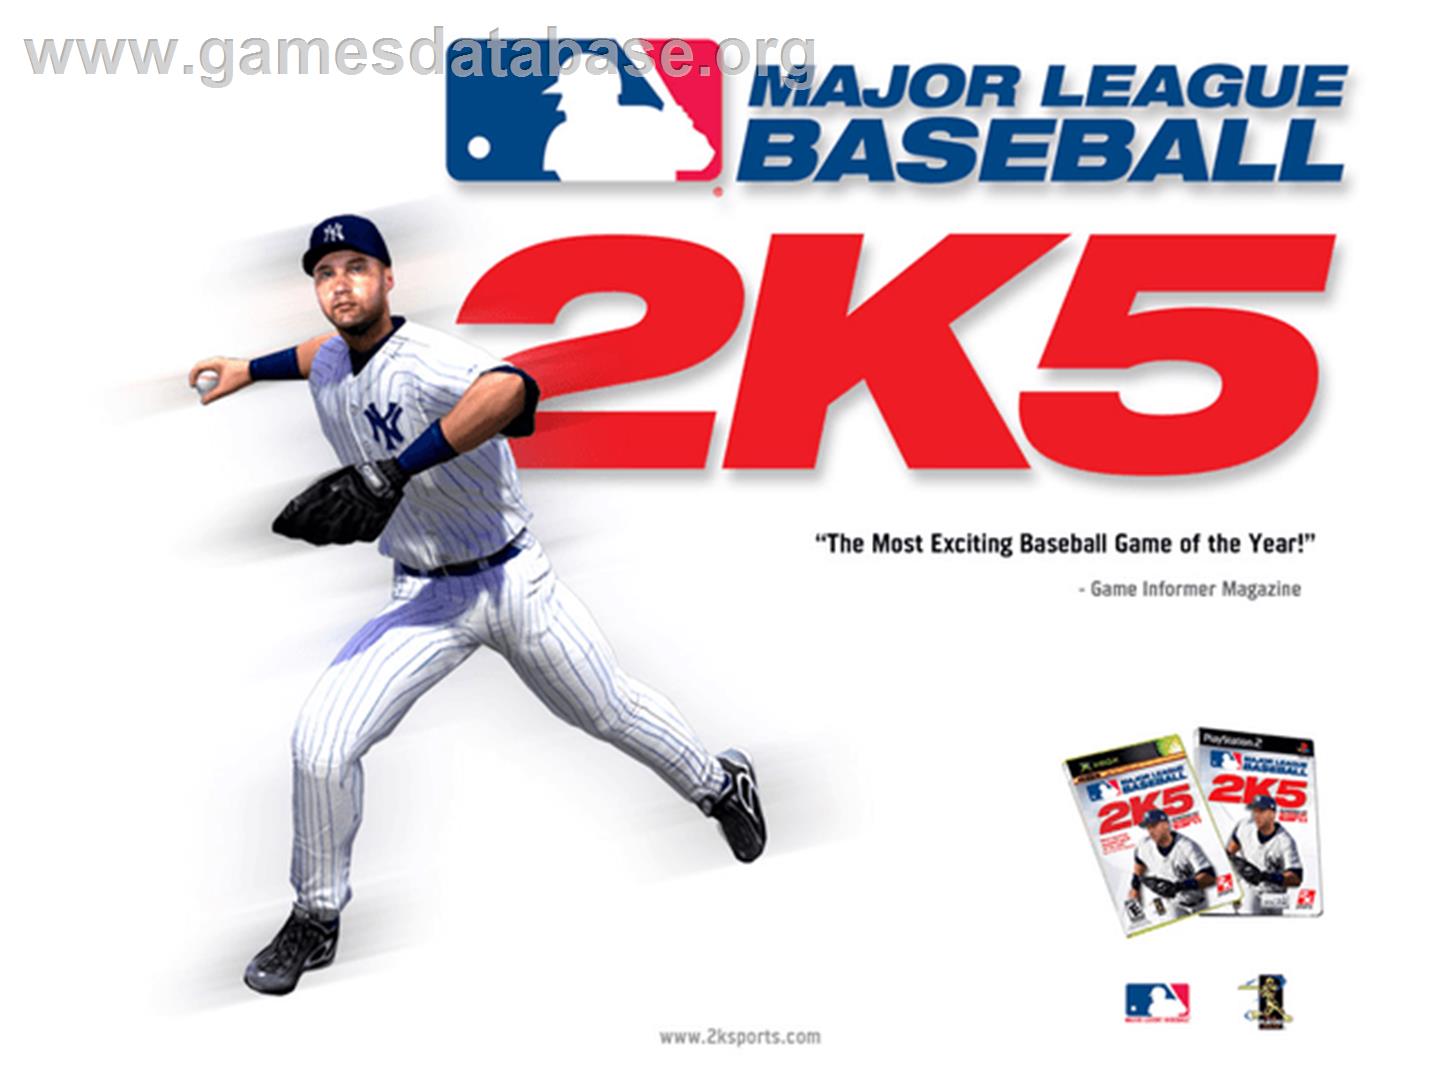 Major League Baseball 2K5 - Microsoft Xbox - Artwork - Title Screen